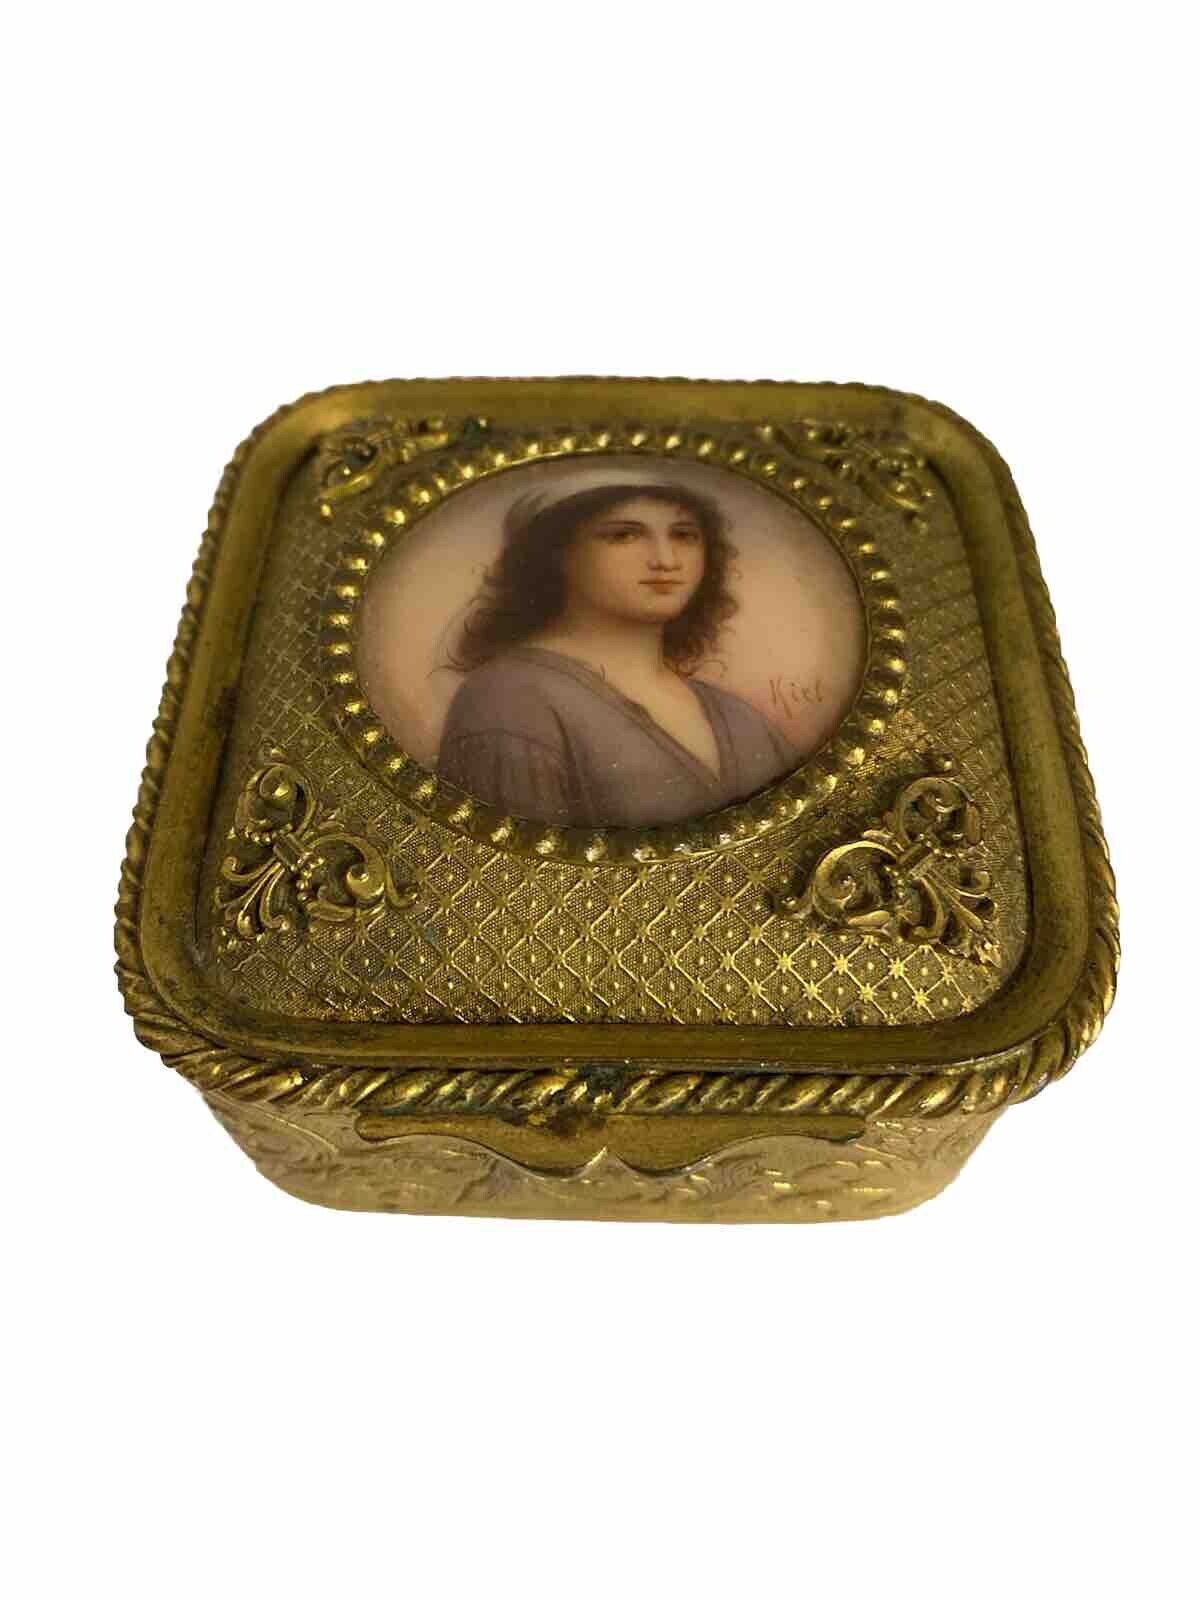 Antique Gilt Metal Dresser Jewelry Box Miniature Portrait Painting Circa 1890